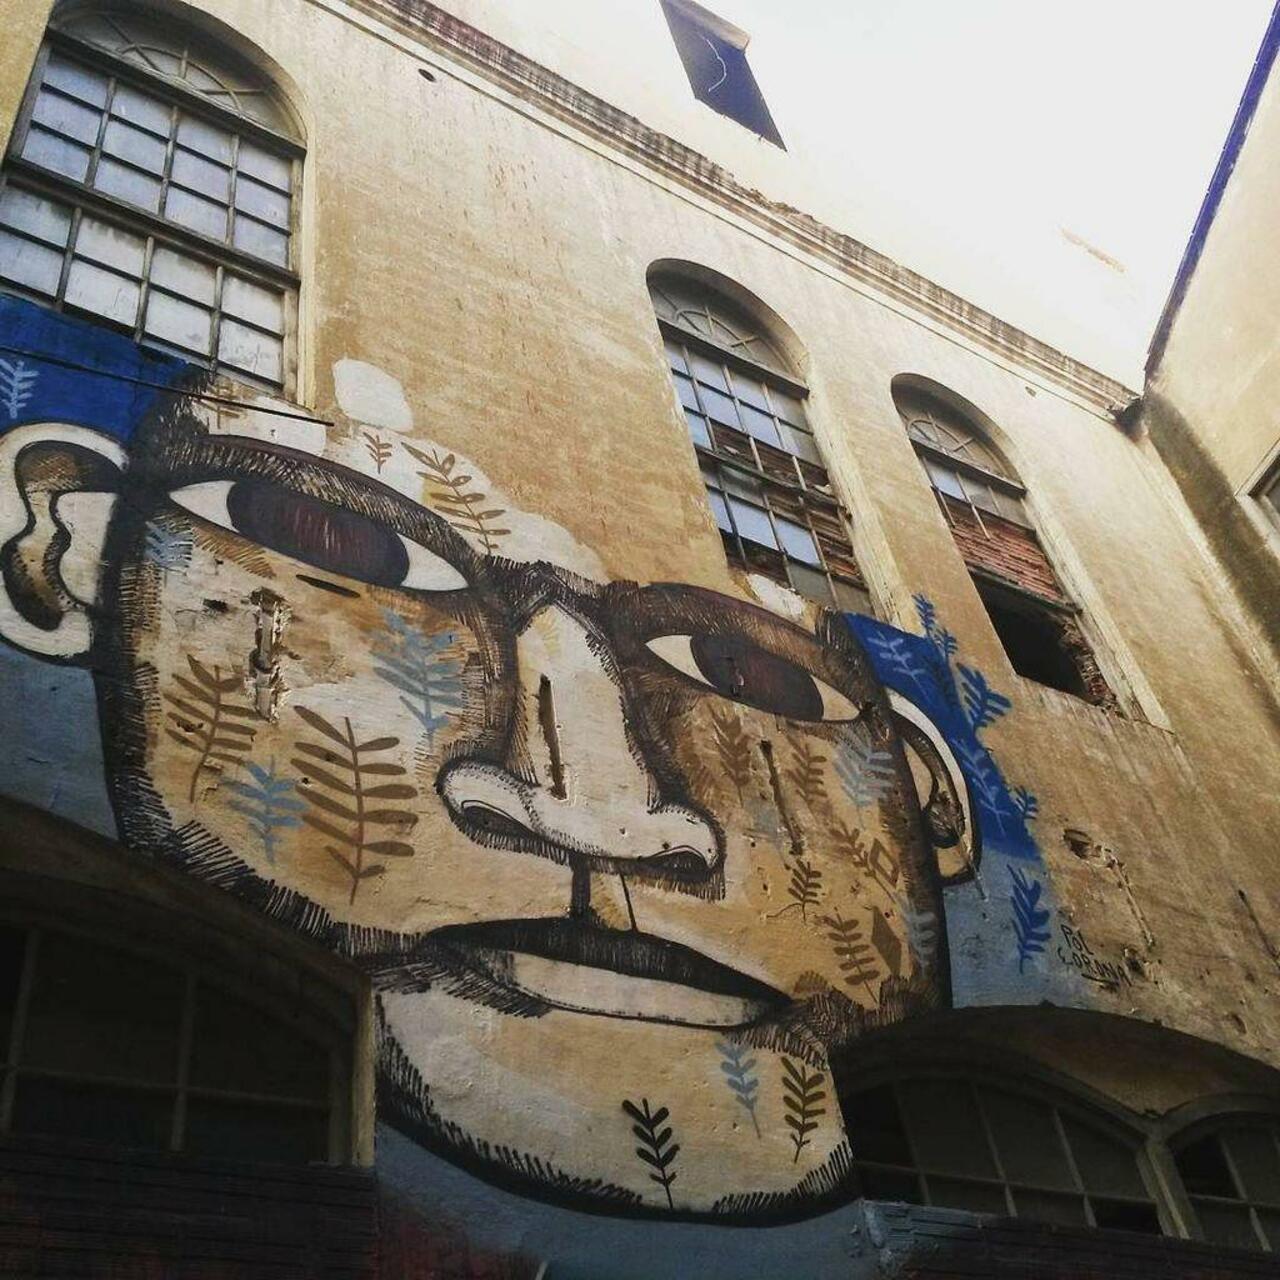 #streetart #onmyway #graffiti #art #arte #urbano #urbanart #efimero #instagraffiti #instaart #instastreetart #barce… http://t.co/6X3lvbDz3H